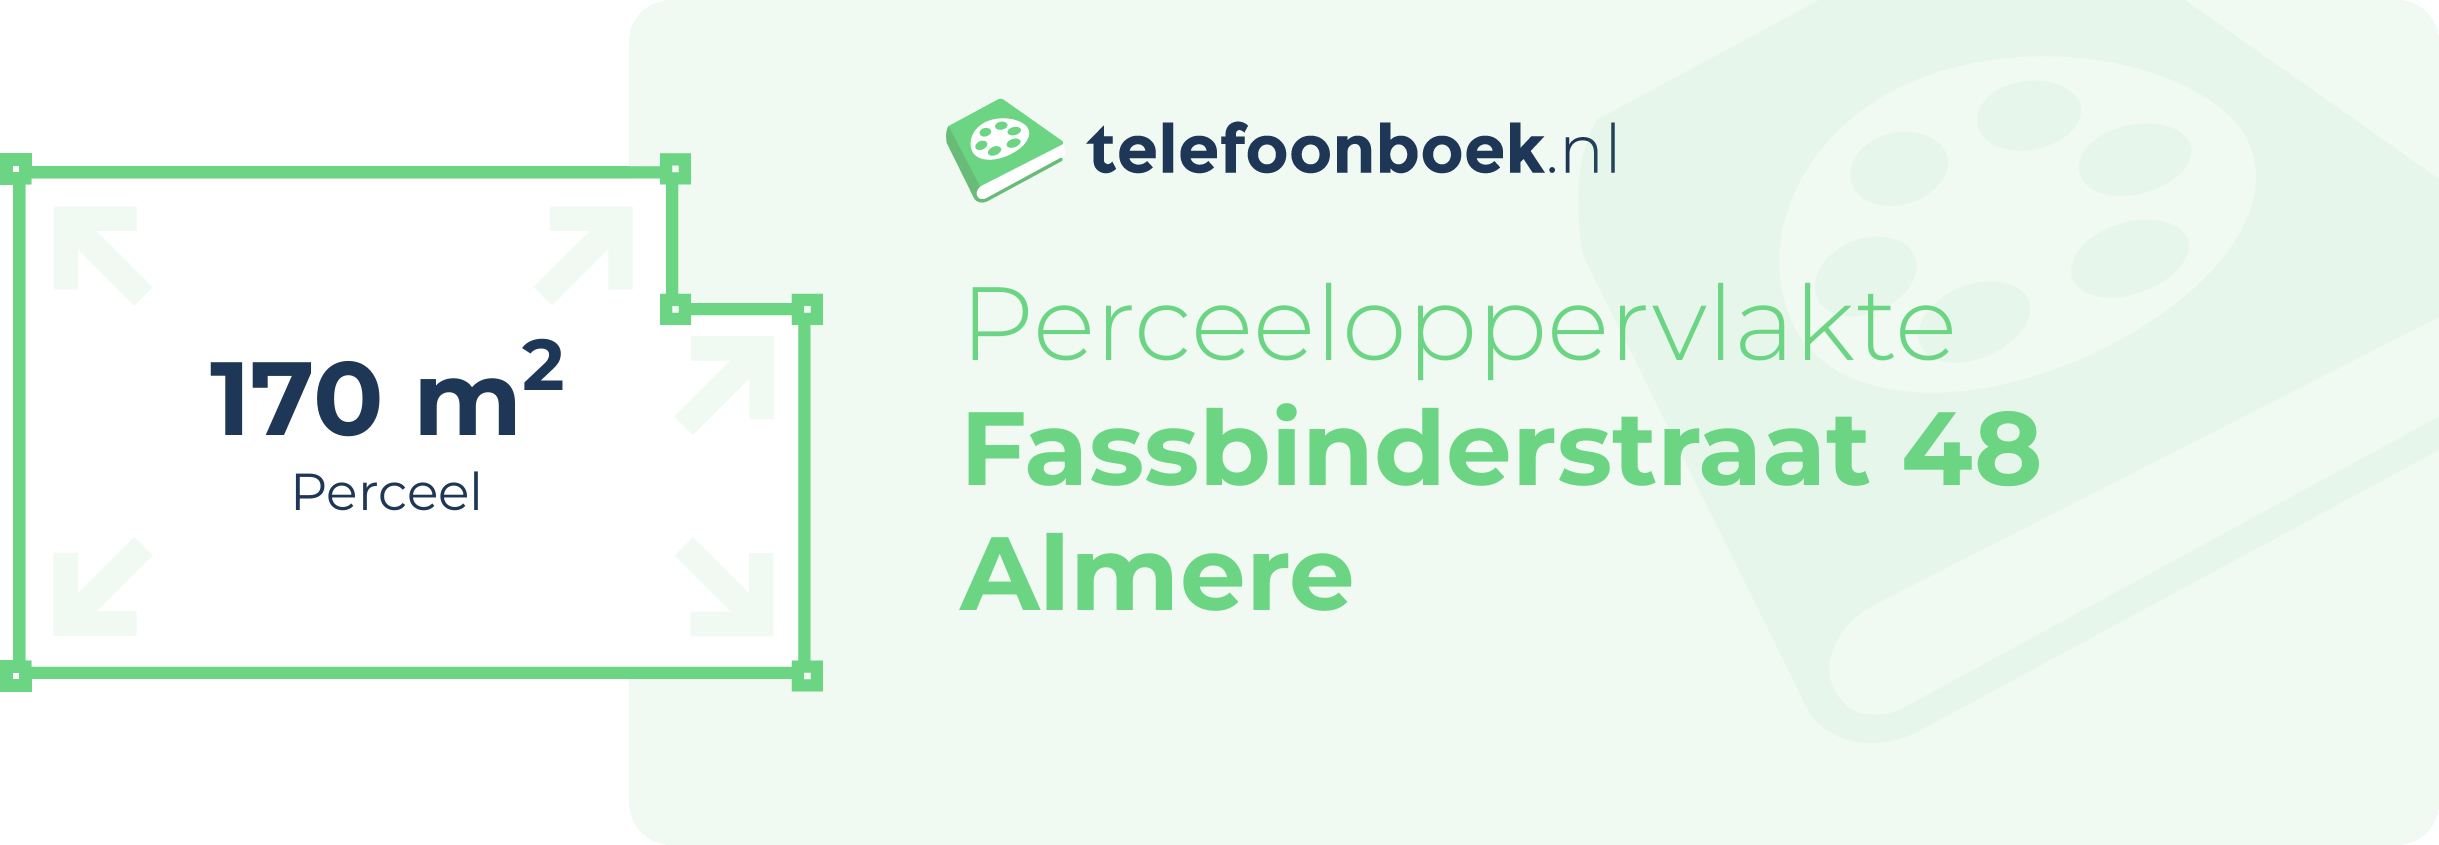 Perceeloppervlakte Fassbinderstraat 48 Almere